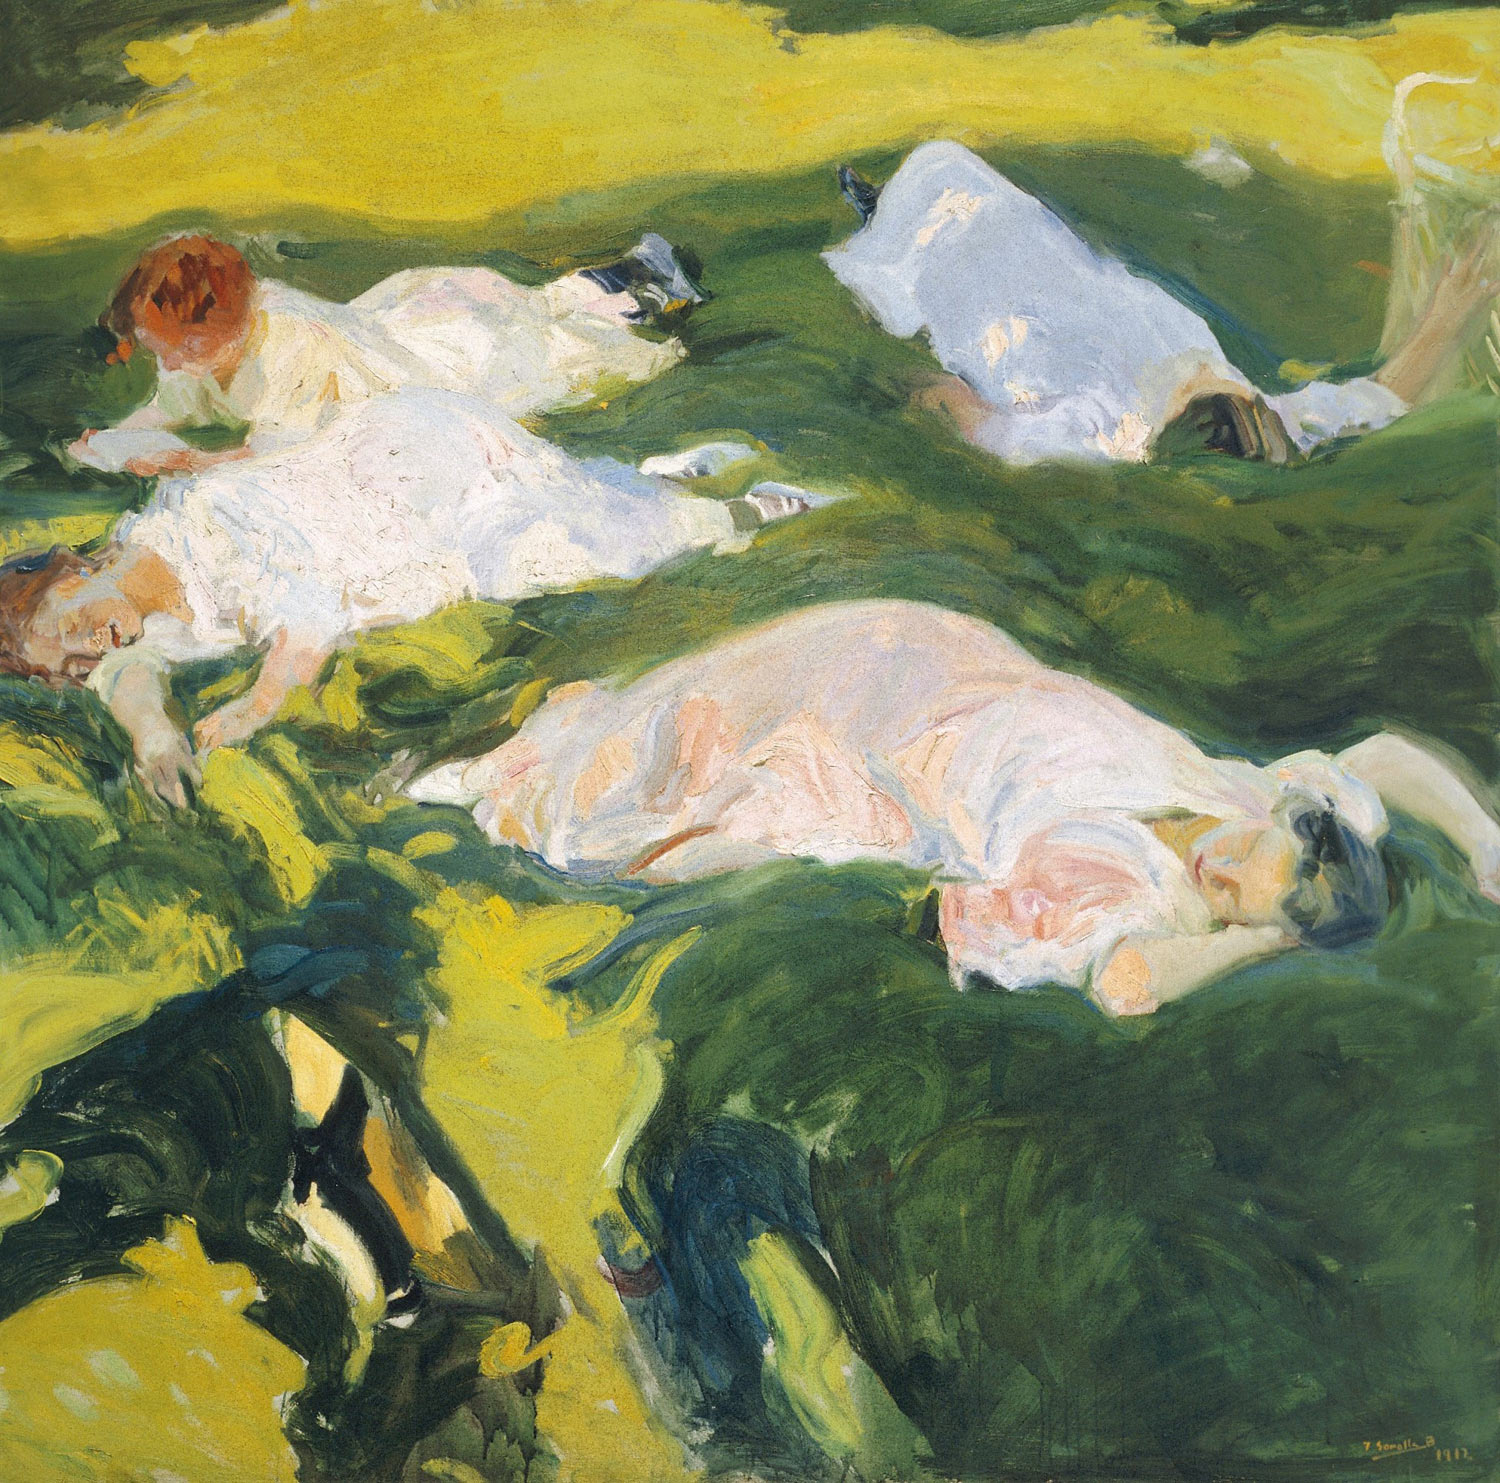 Joaquín Sorolla, La siesta (1911; olio su tela, 200 x 201 cm; Madrid, Museo Sorolla) 